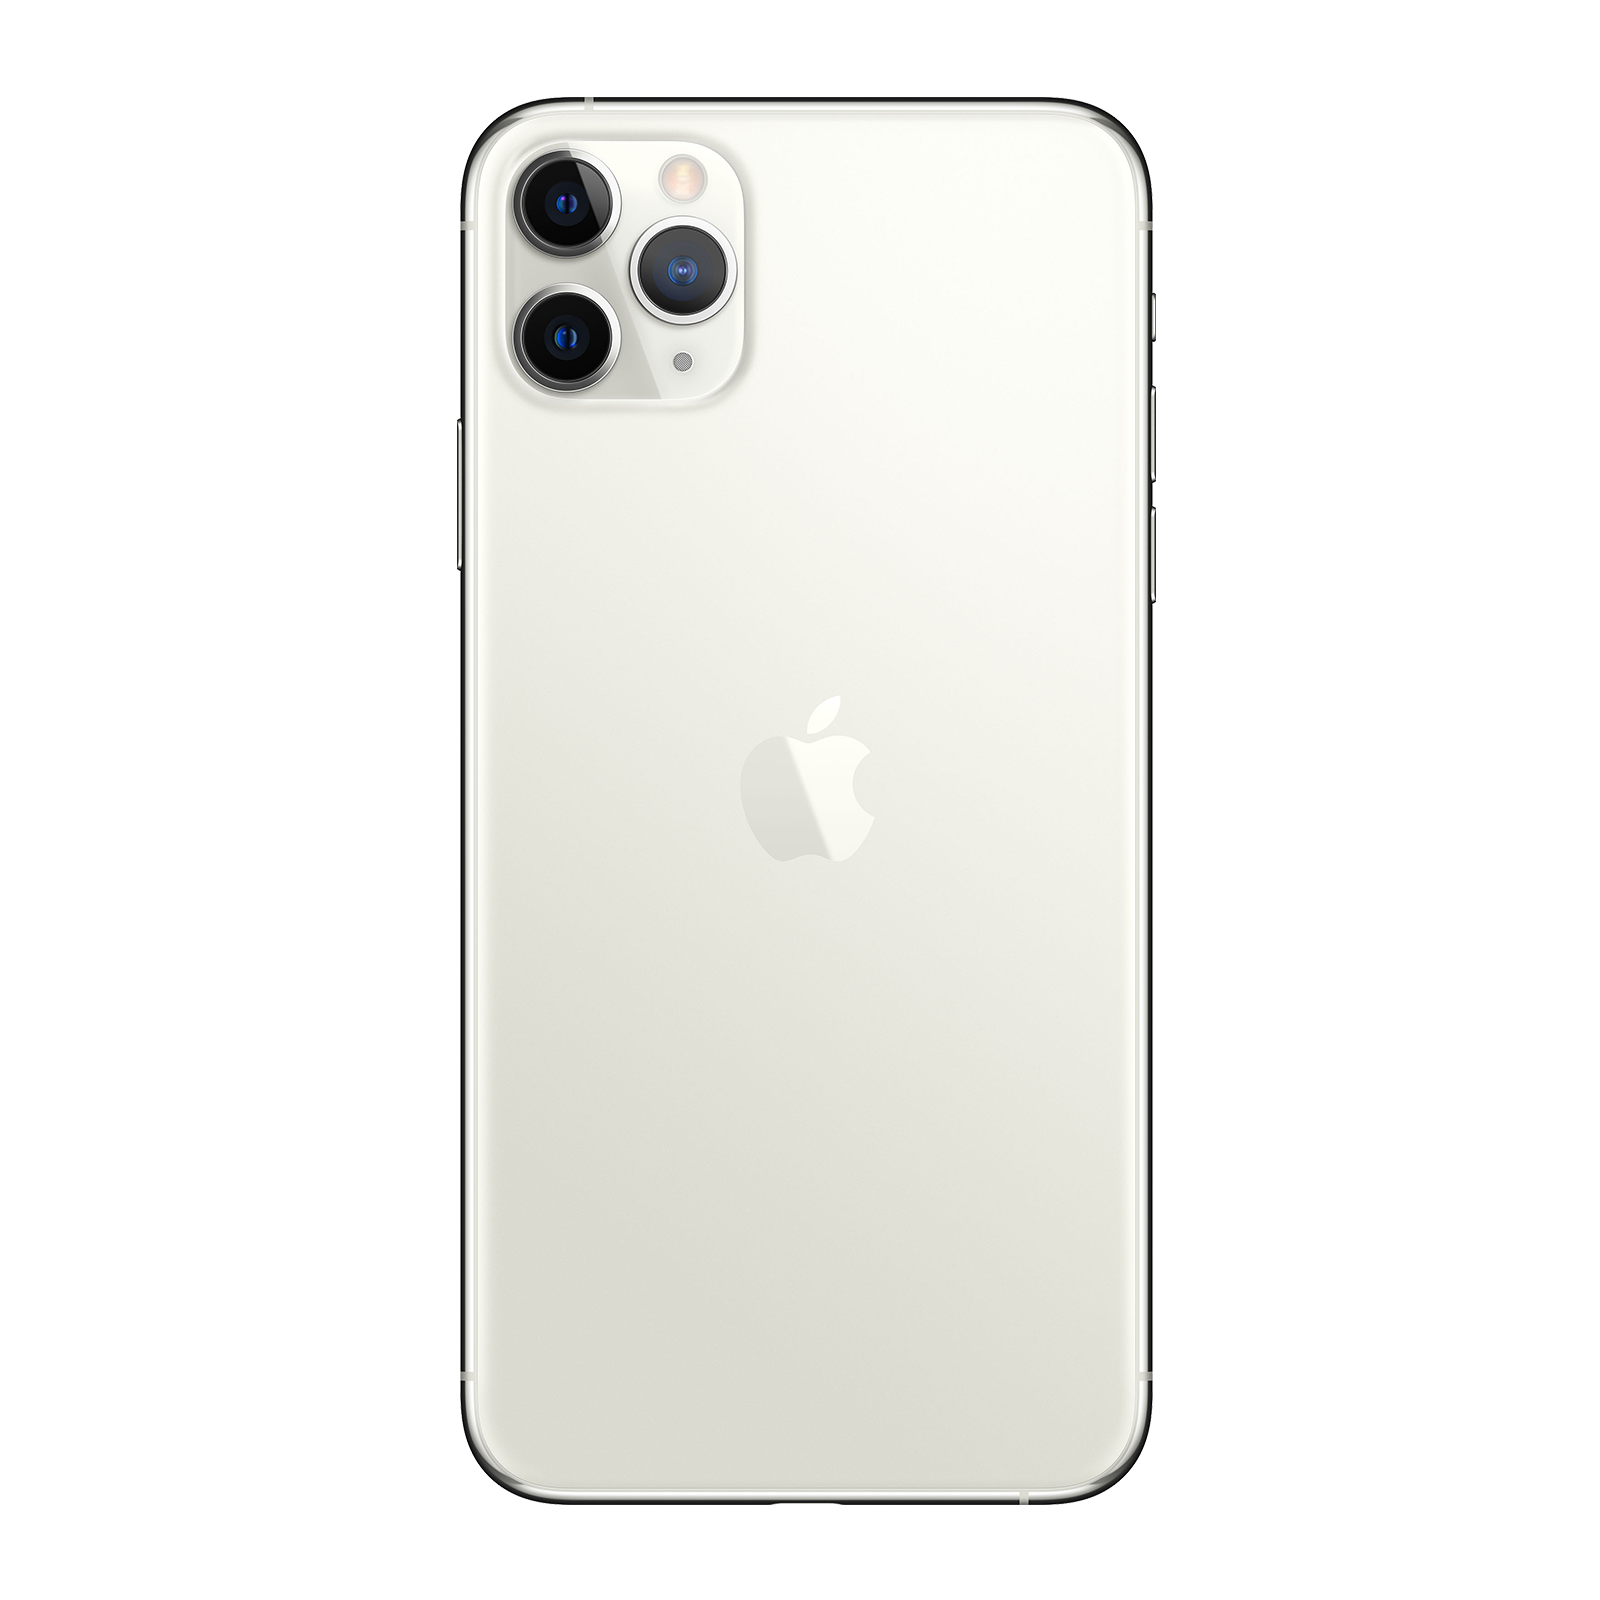 Apple iPhone 11 Pro Max 256GB Silver Good - Verizon